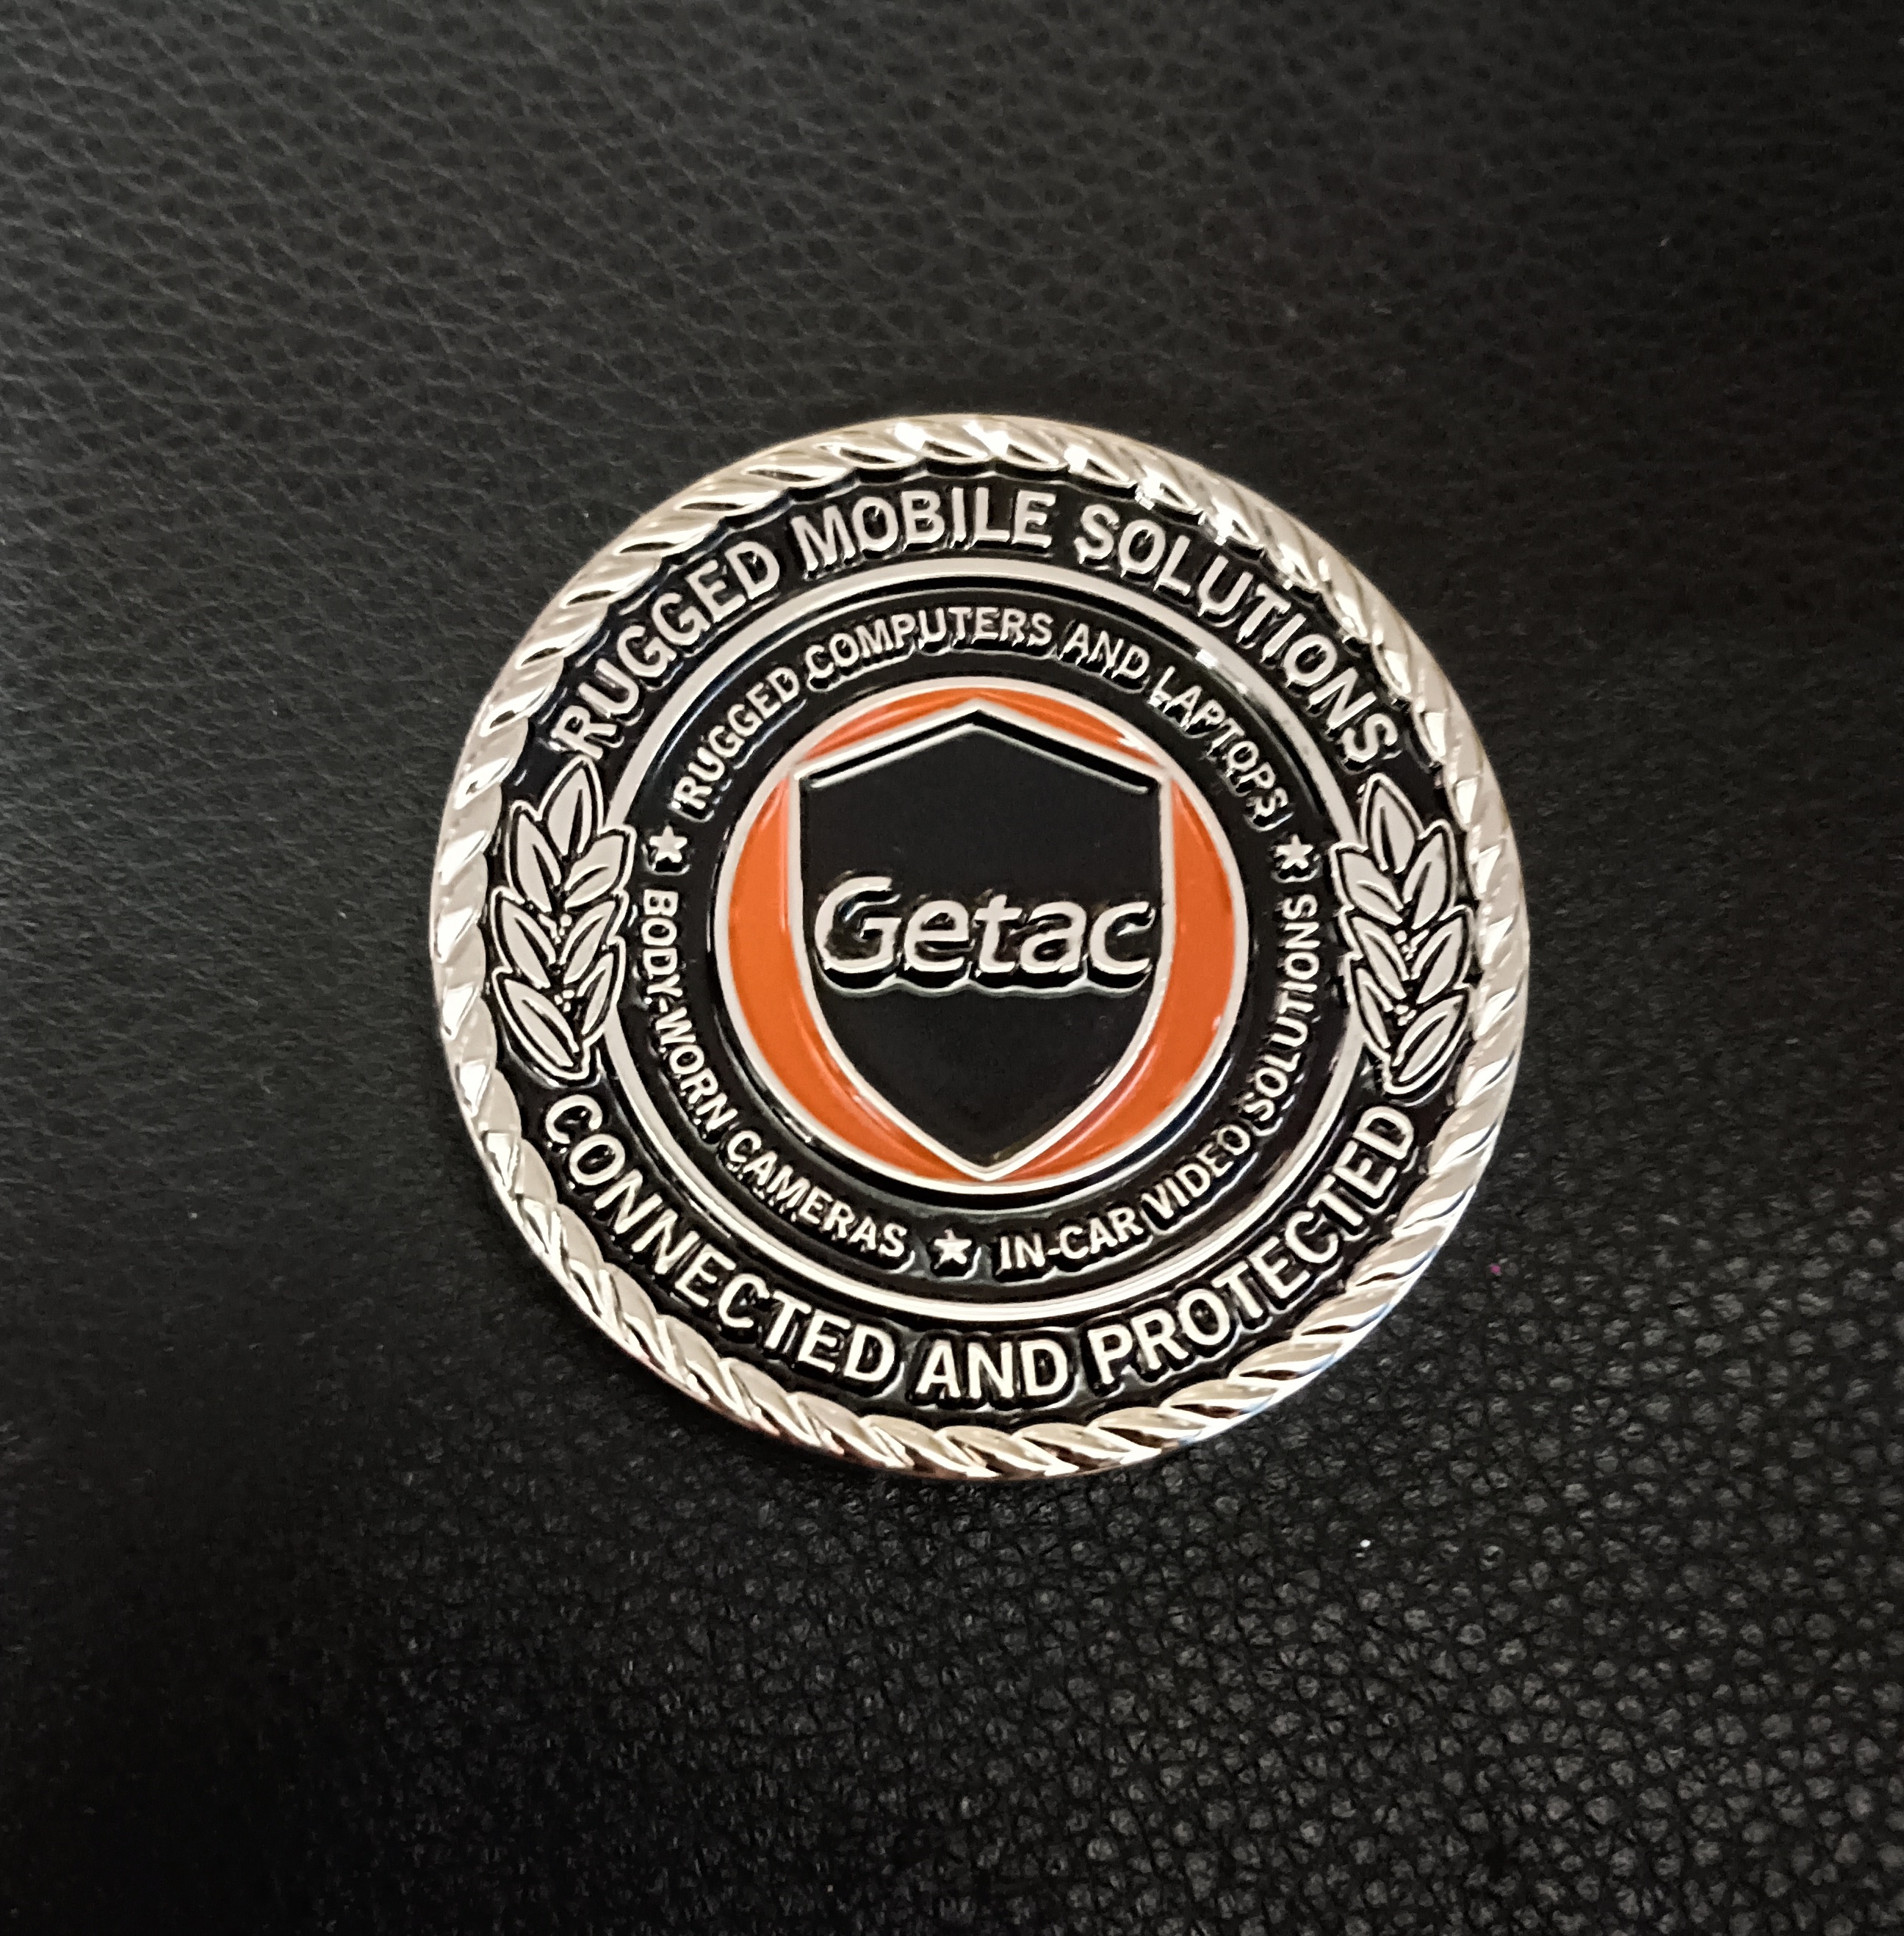 Getac Challenge Coin